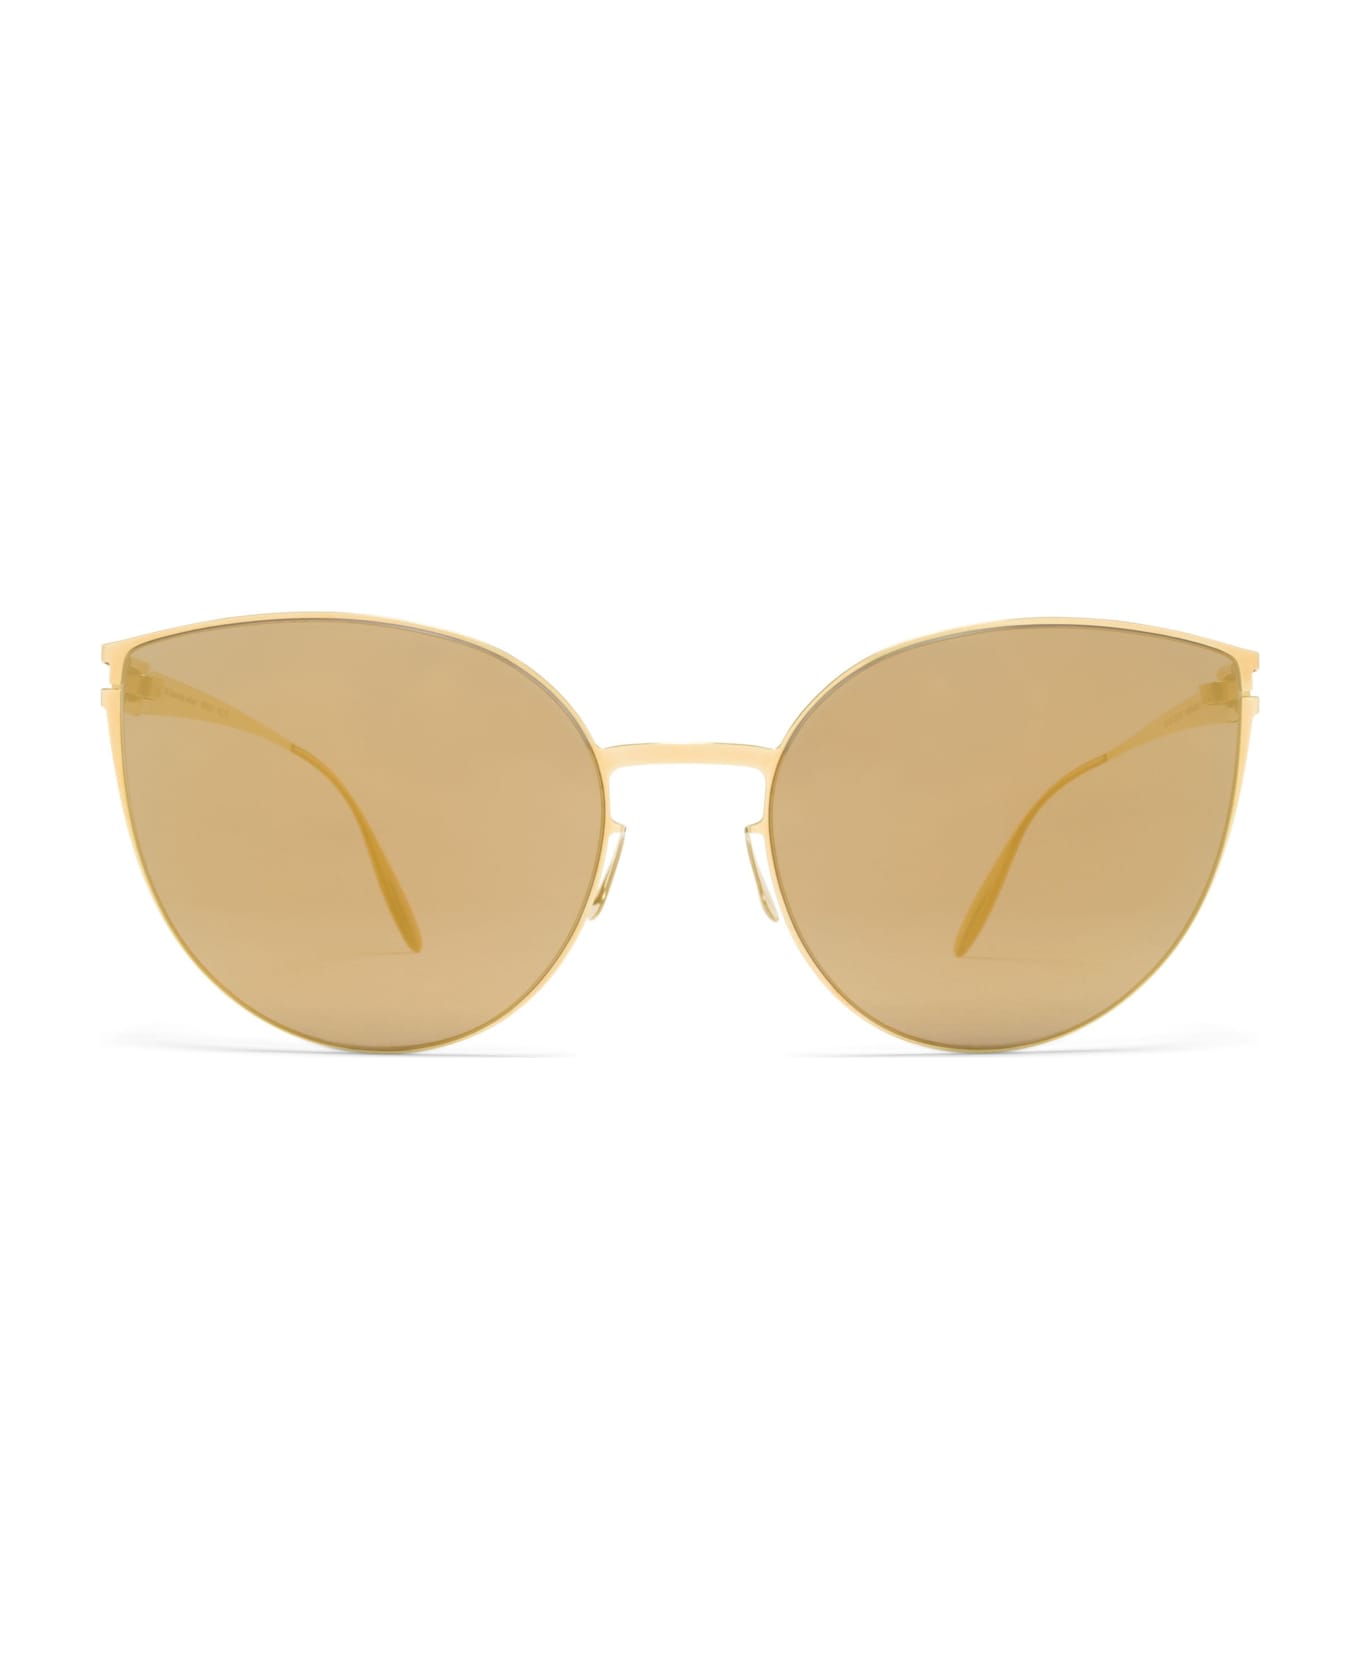 Mykita Sunglasses - Oro/Specchiato oro サングラス